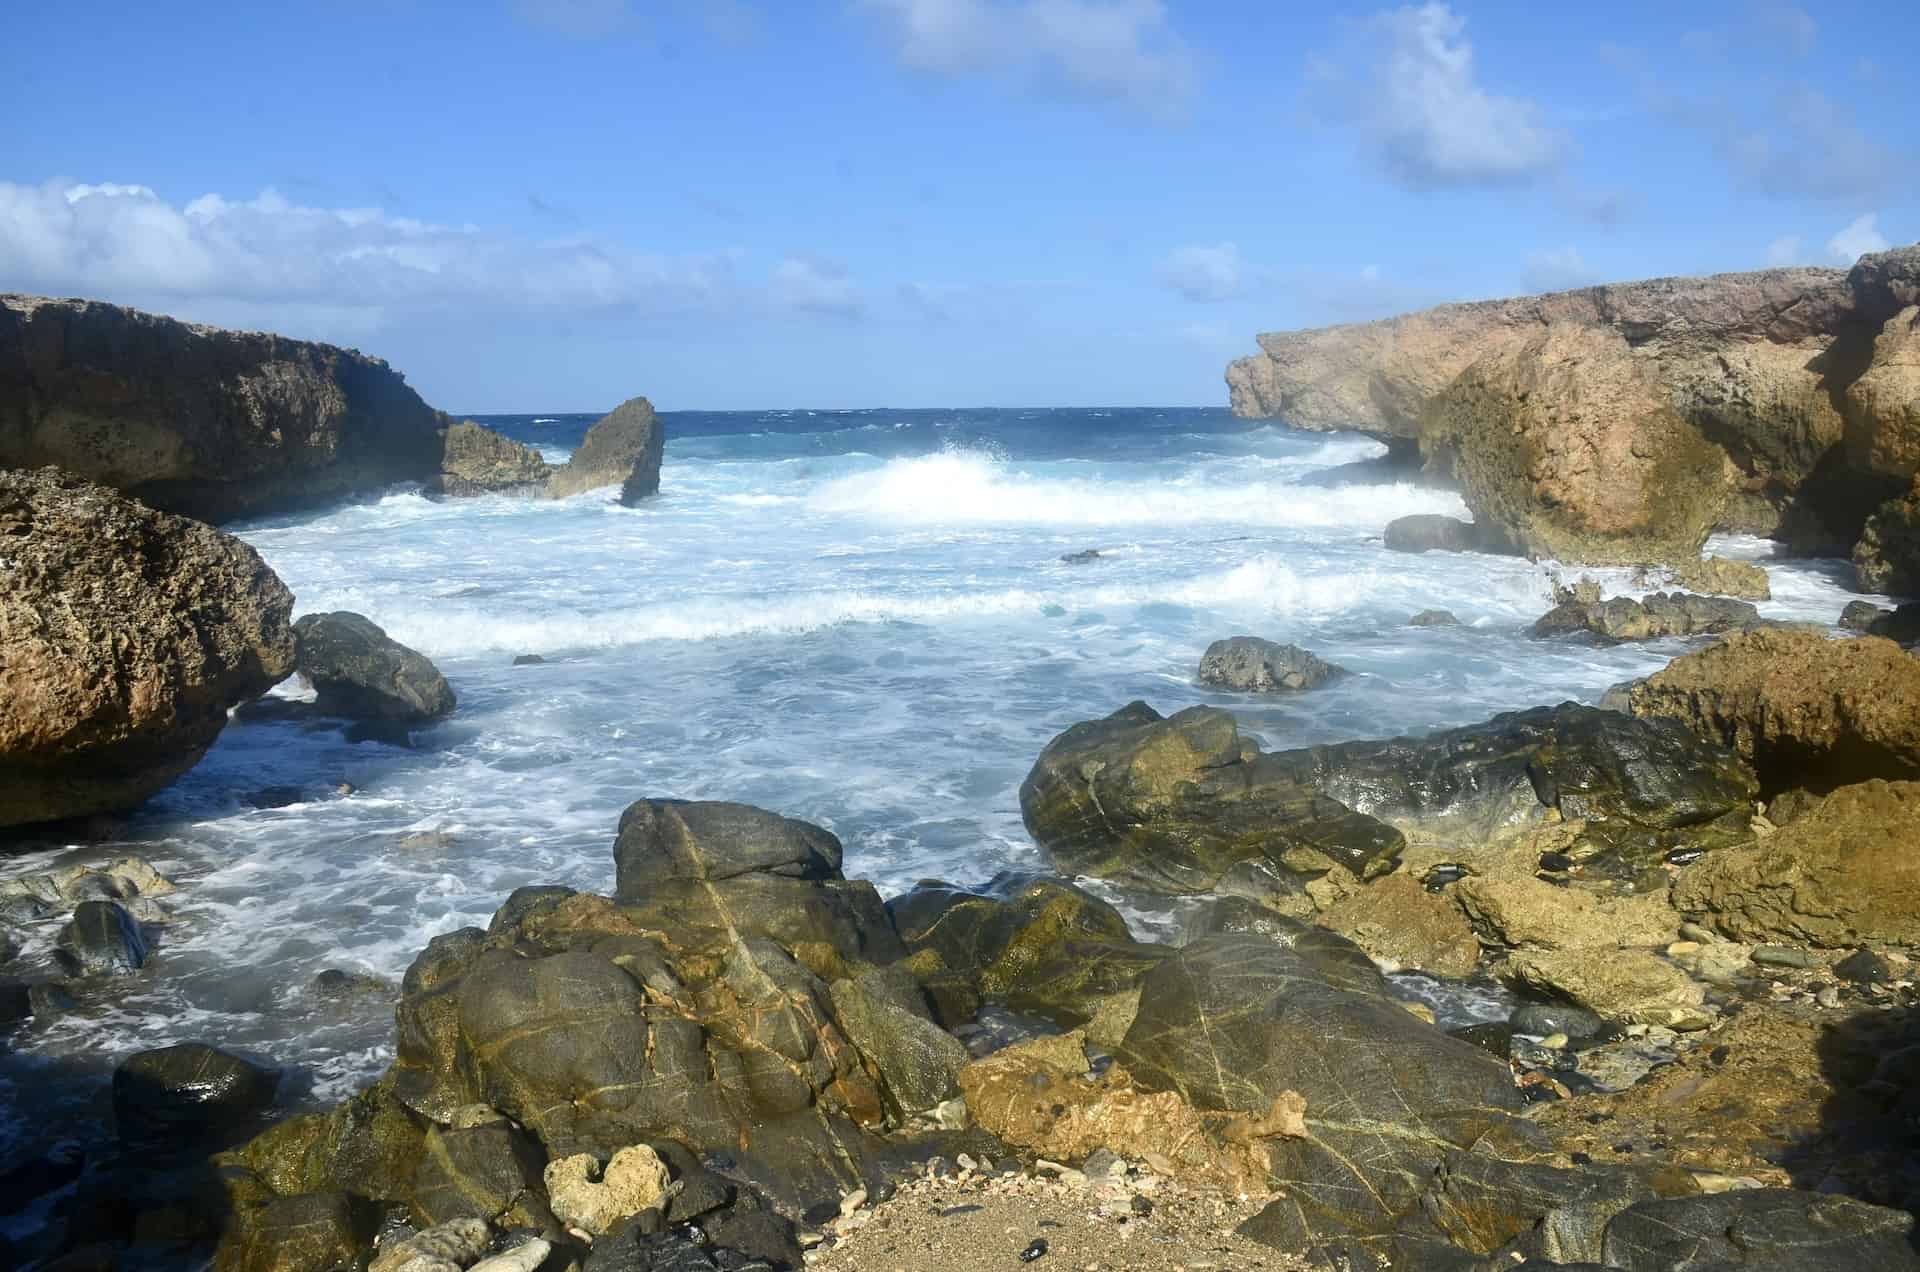 Cairn's Cove in Paradera, Aruba